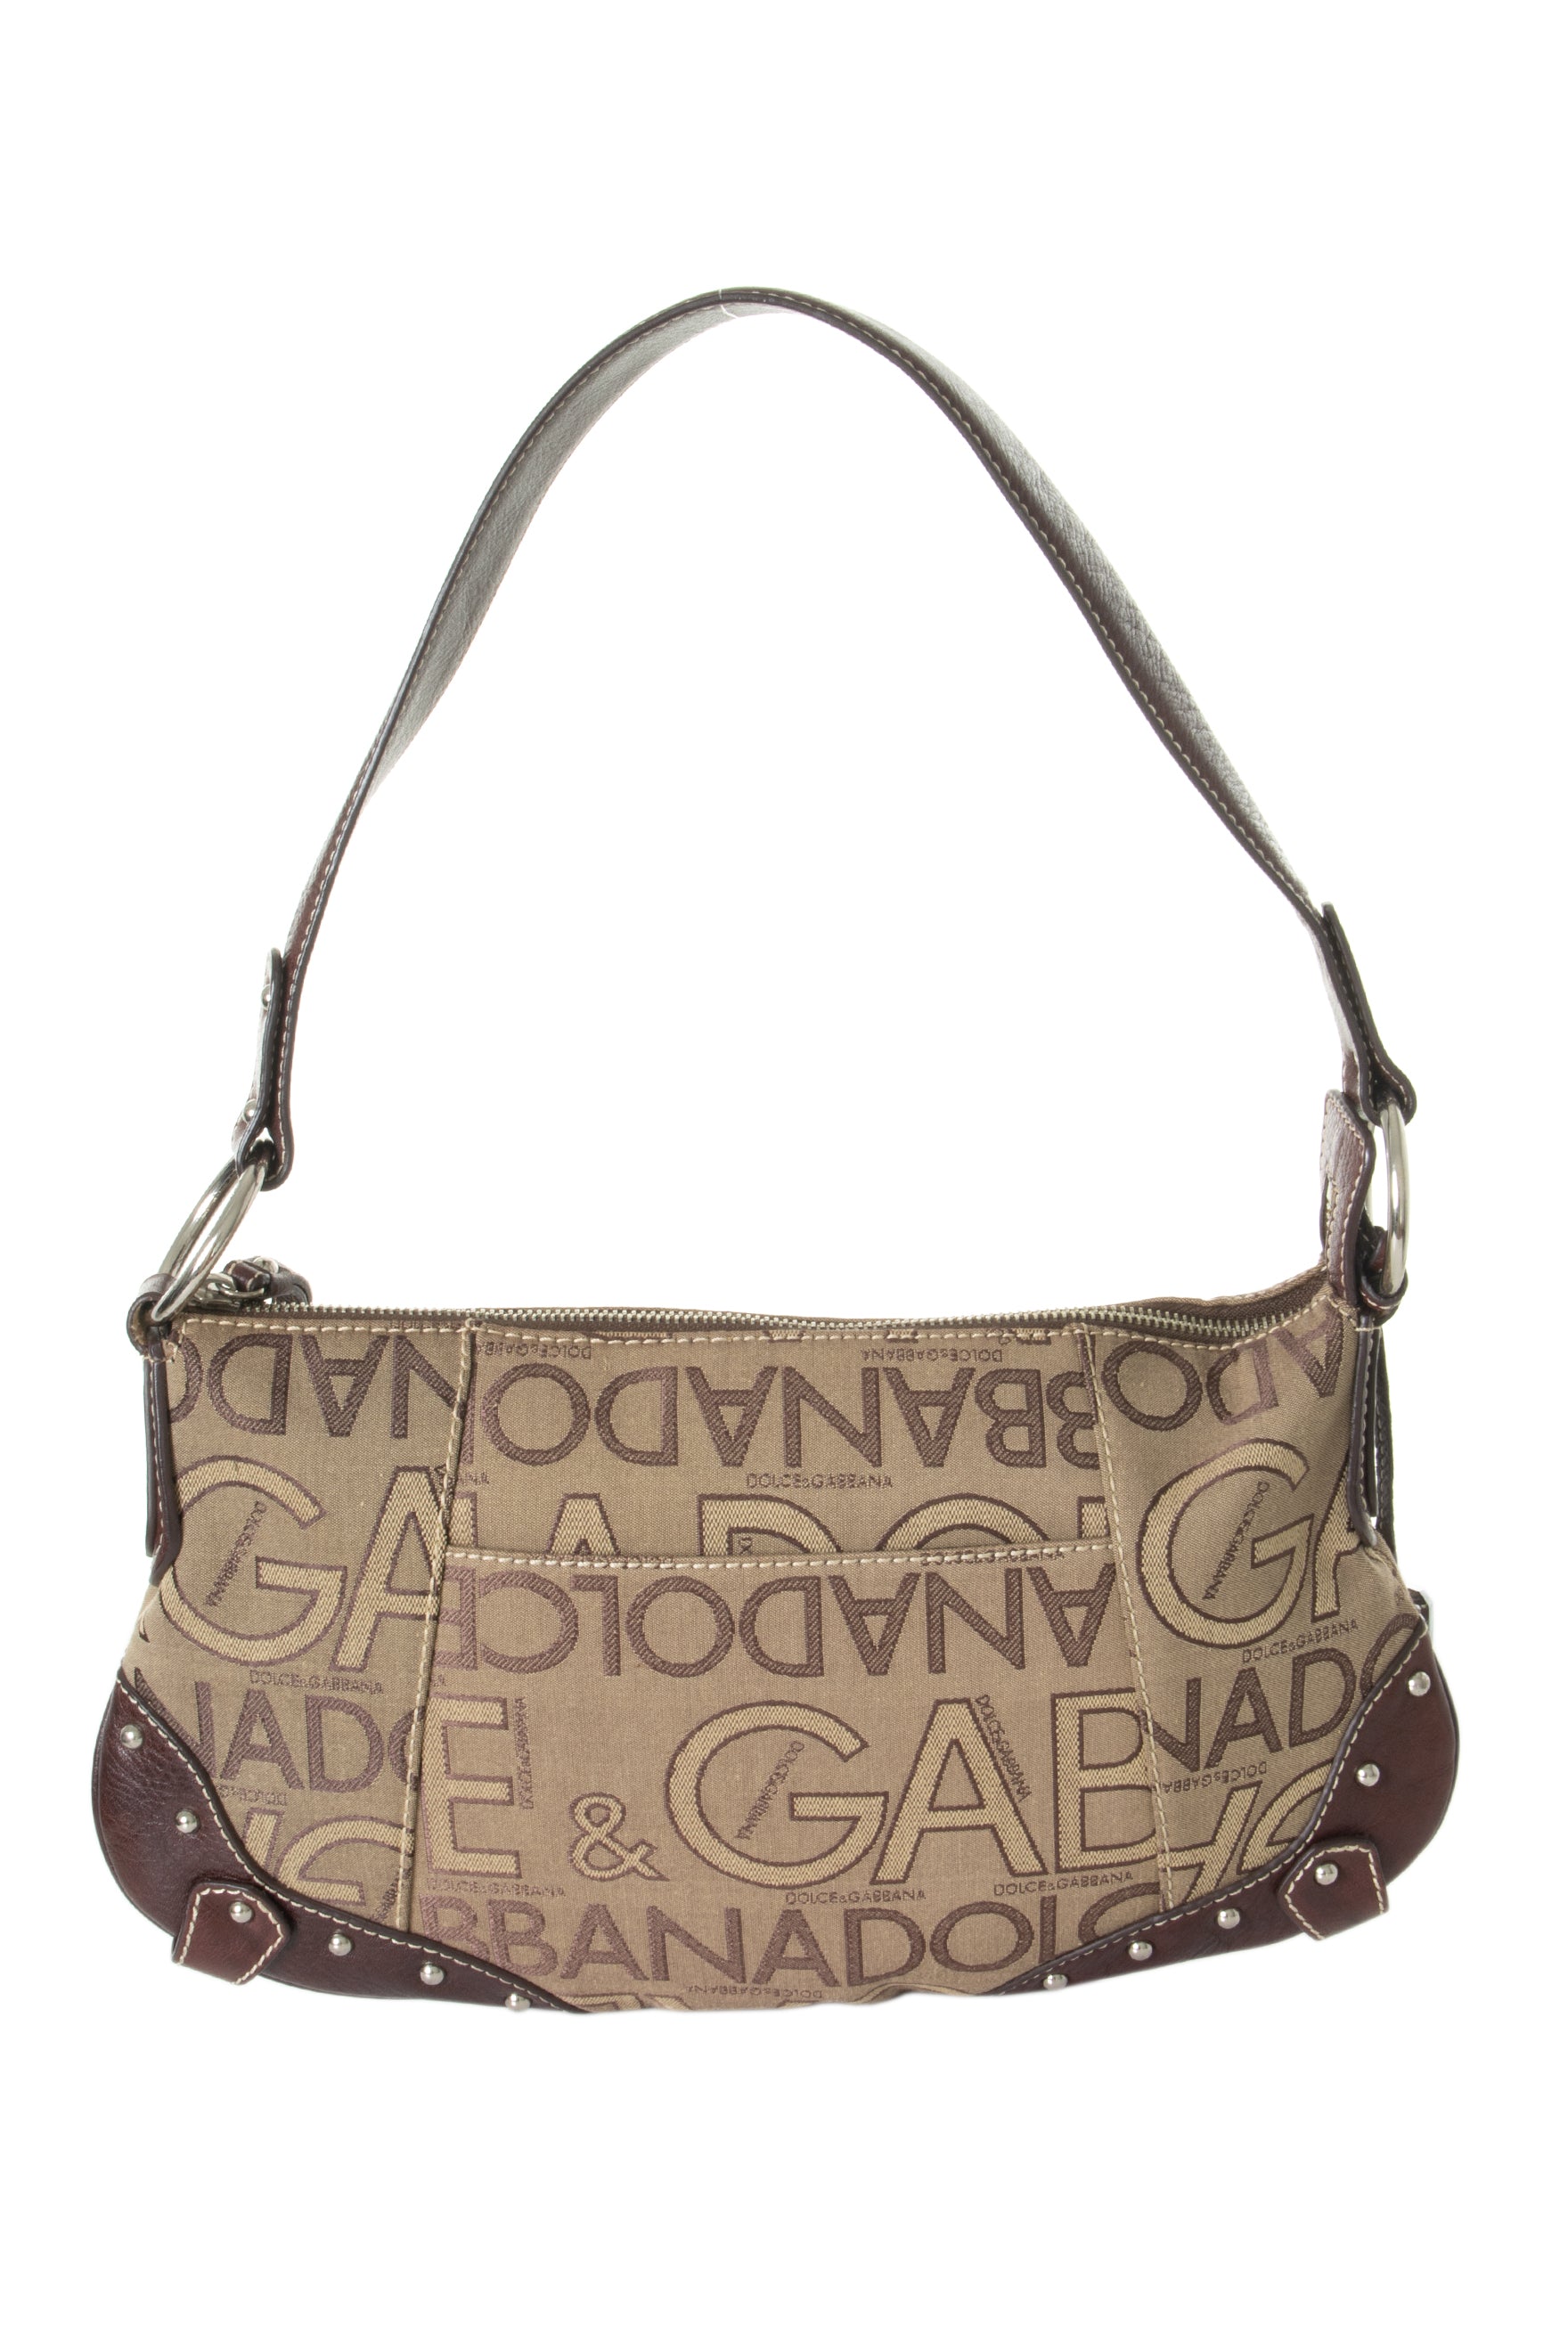 Dolce and Gabbana Monogram Bag | irvrsbl